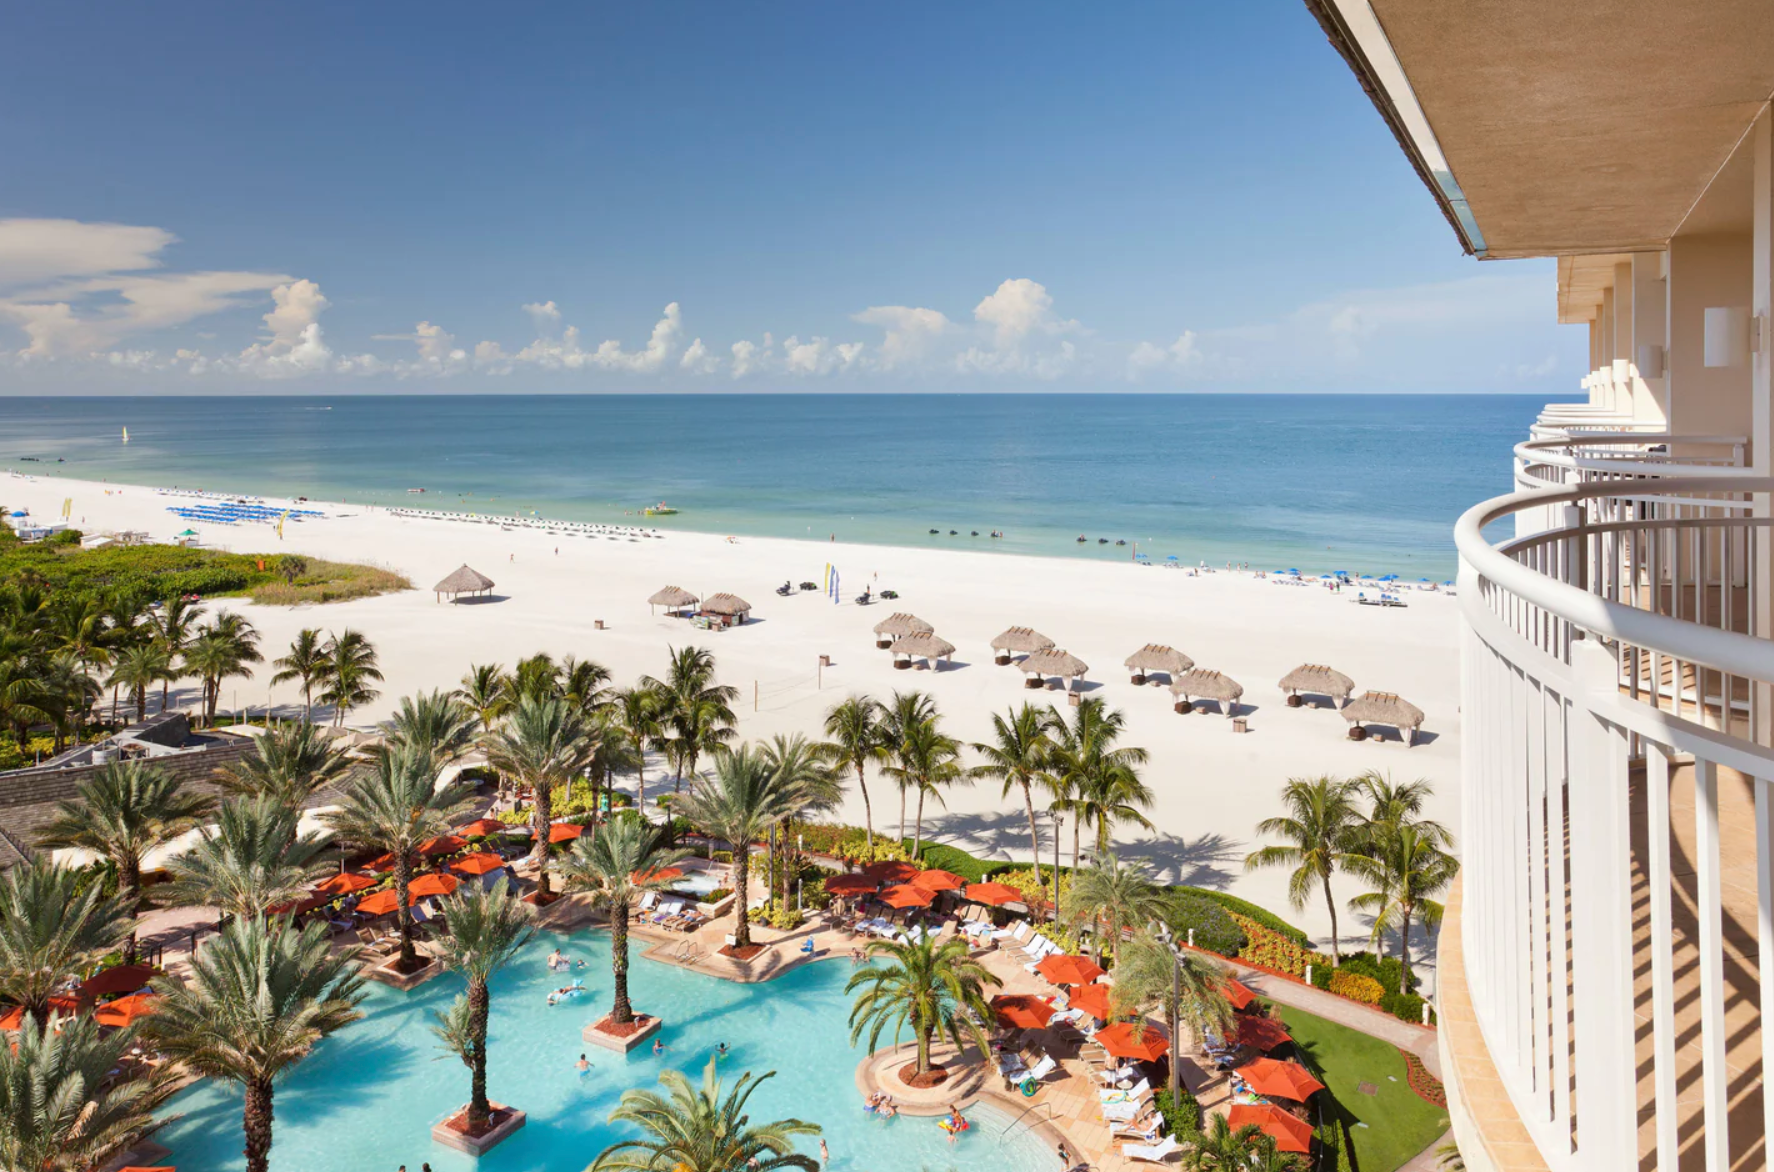 Optometry Times®' Eyecon 2022 kicks off this December at JW Marriott Marco Island Beach Resort in Marco Island, Florida. Image courtesy of JW Marriott Marco Island Beach Resort.